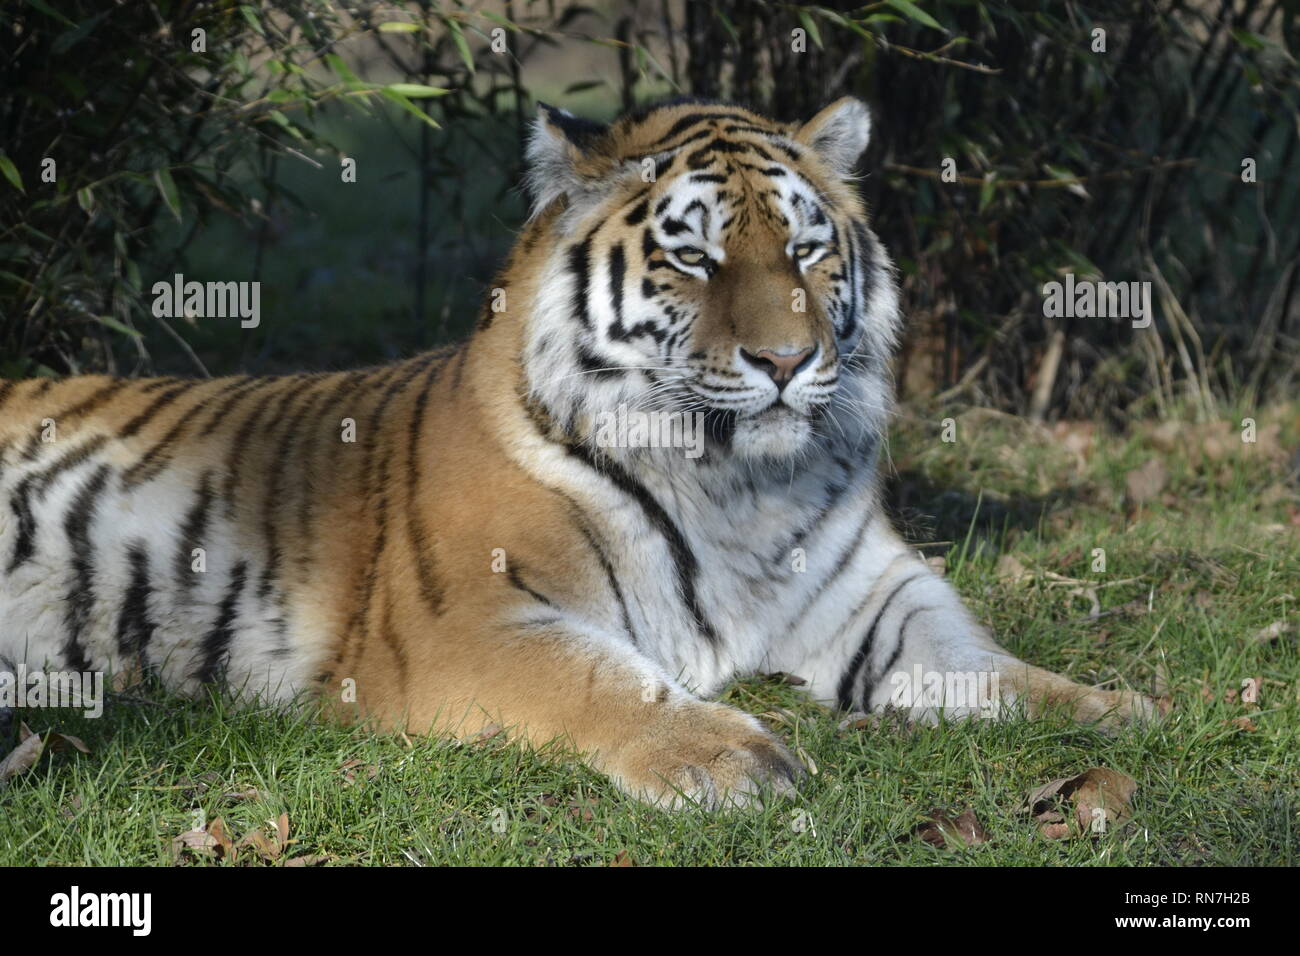 A Siberian Tiger (also called amur tiger) at Woburn Safari Park, Woburn, Bedfordshire, UK Stock Photo